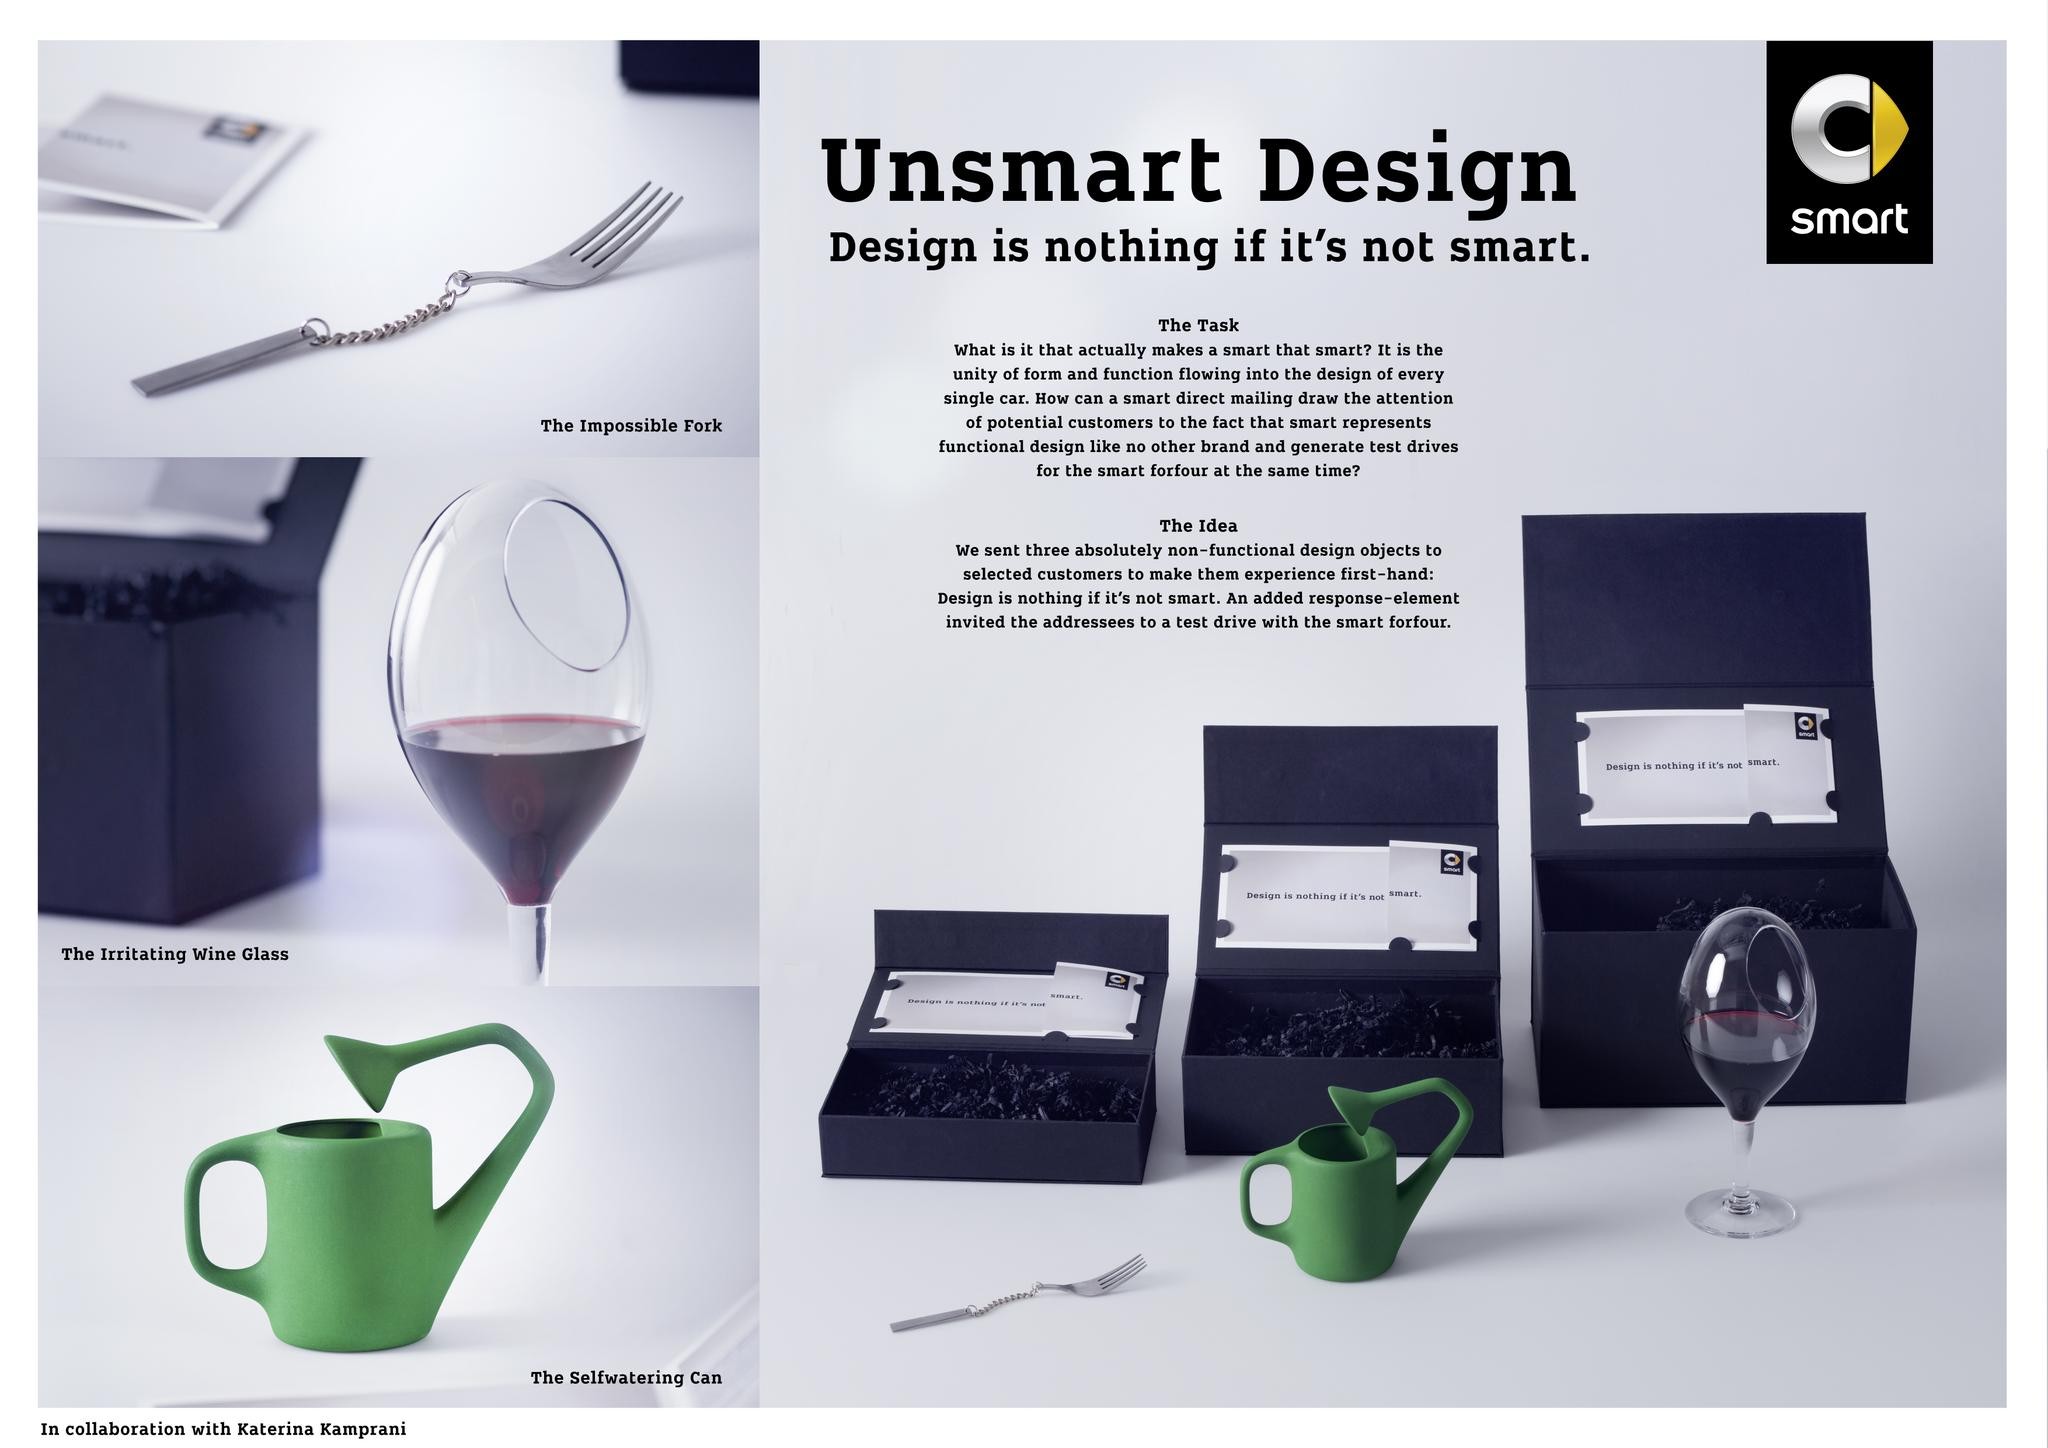 Smart - "Unsmart Design"